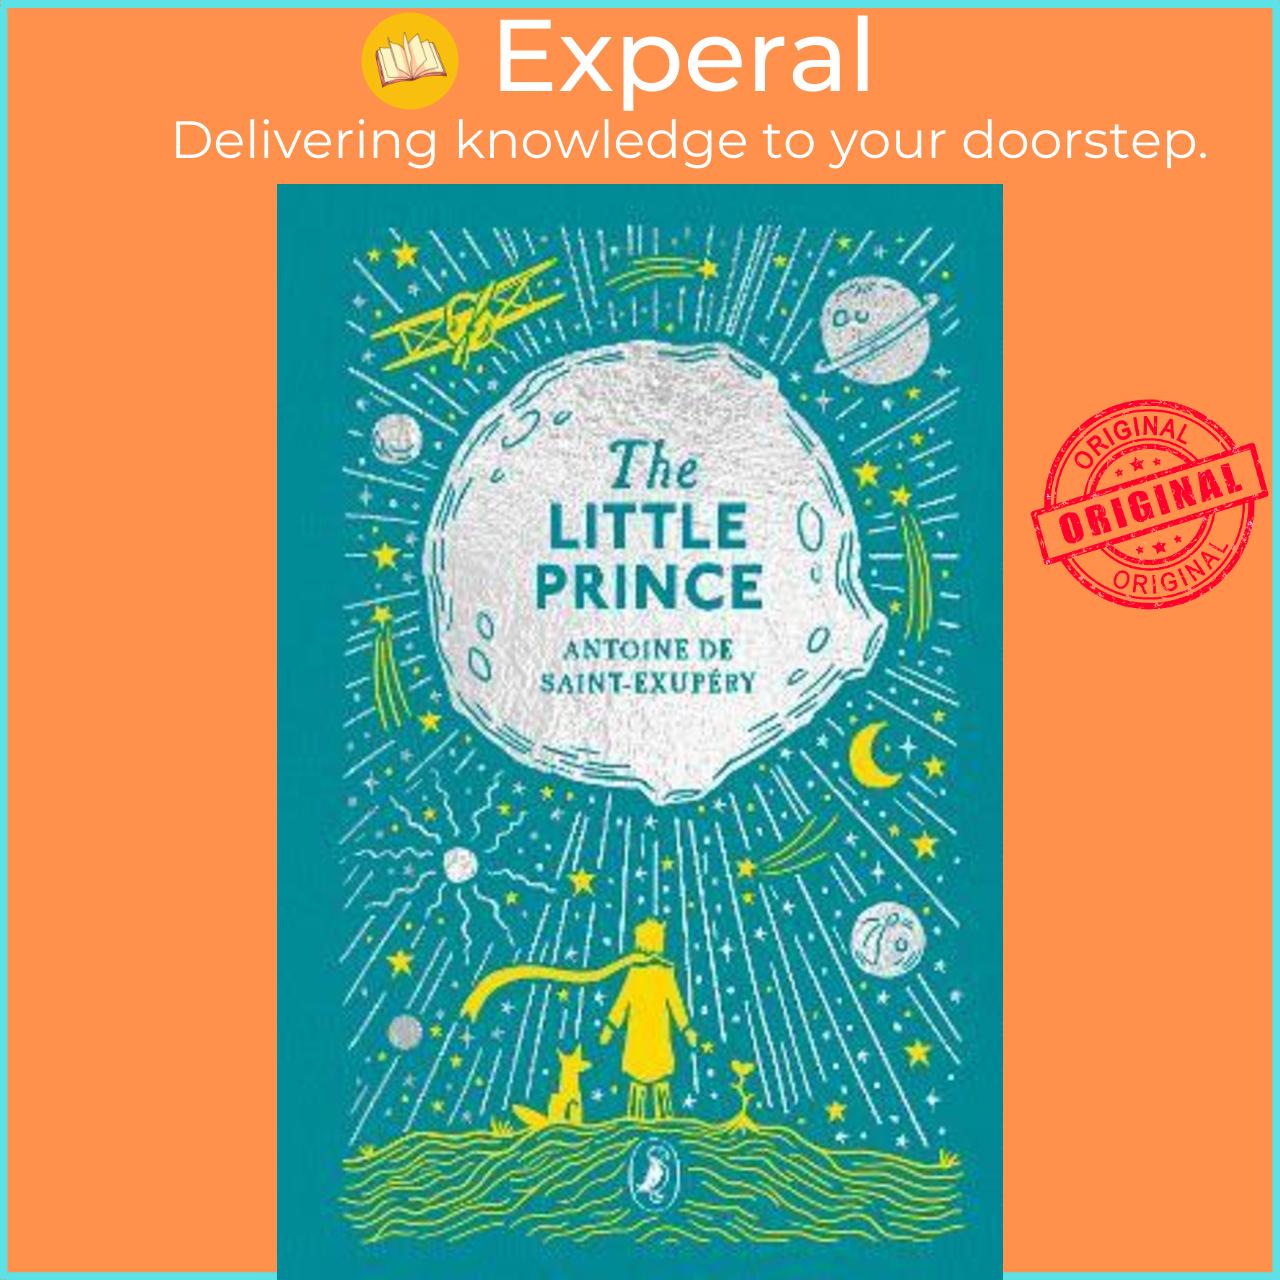 Sách - The Little Prince by Antoine de Saint-Exupéry (UK edition, hardcover)